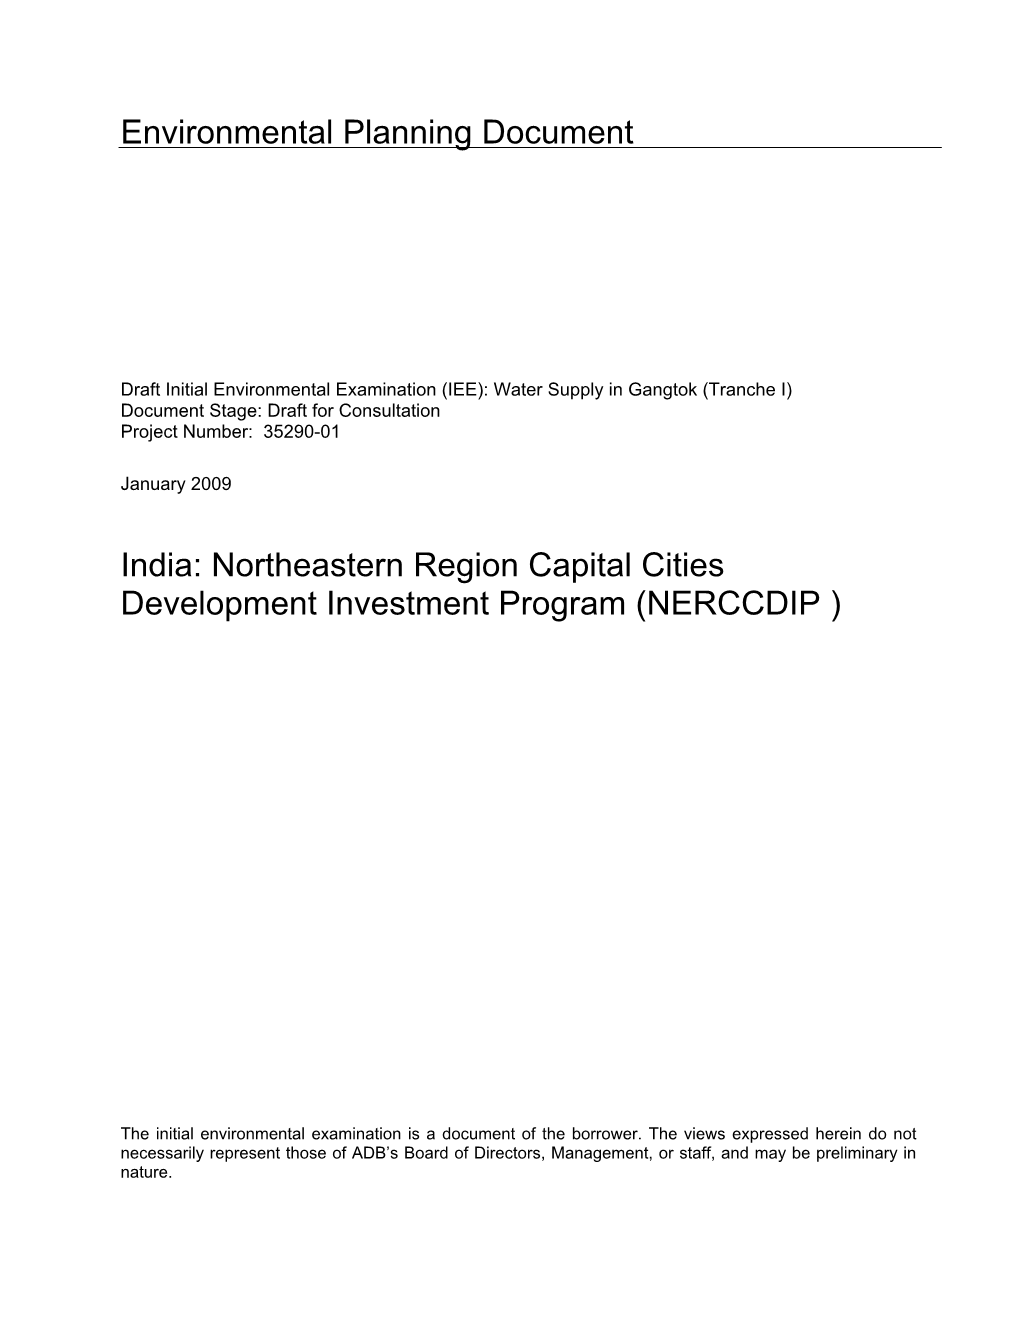 Northeastern Region Capital Cities Development Investment Program (NERCCDIP )